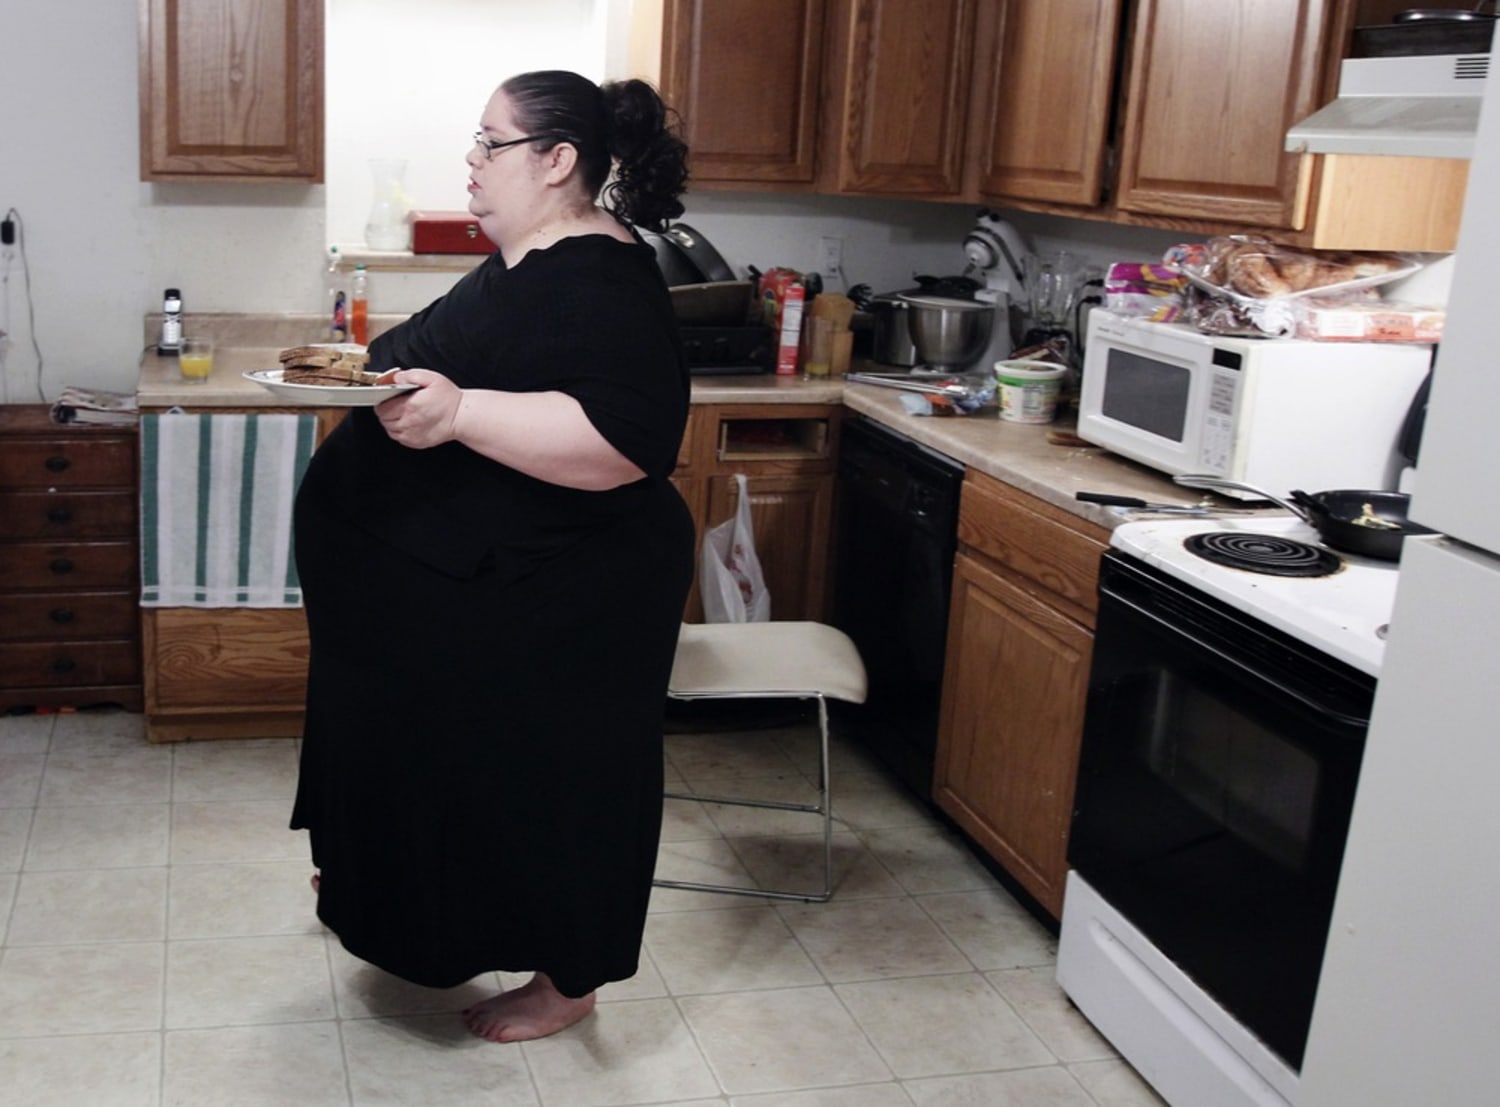 600-pound woman halts pay-per-view eating